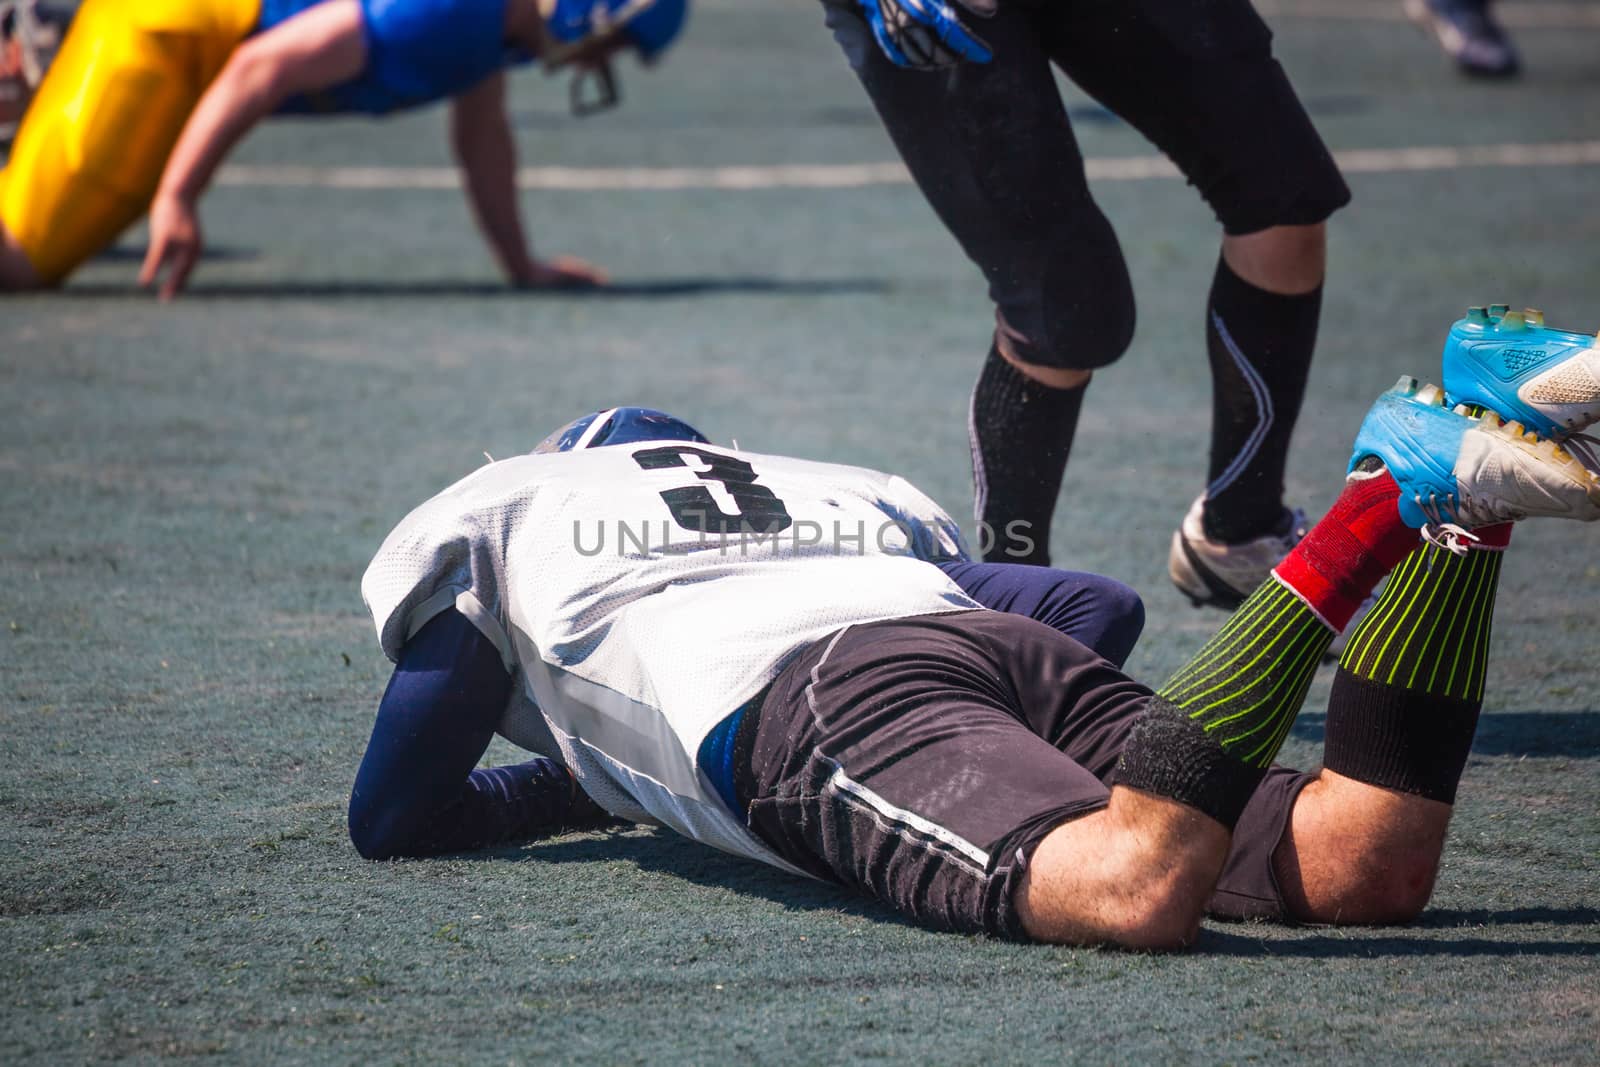 injured athlete lies on the grass of the stadium